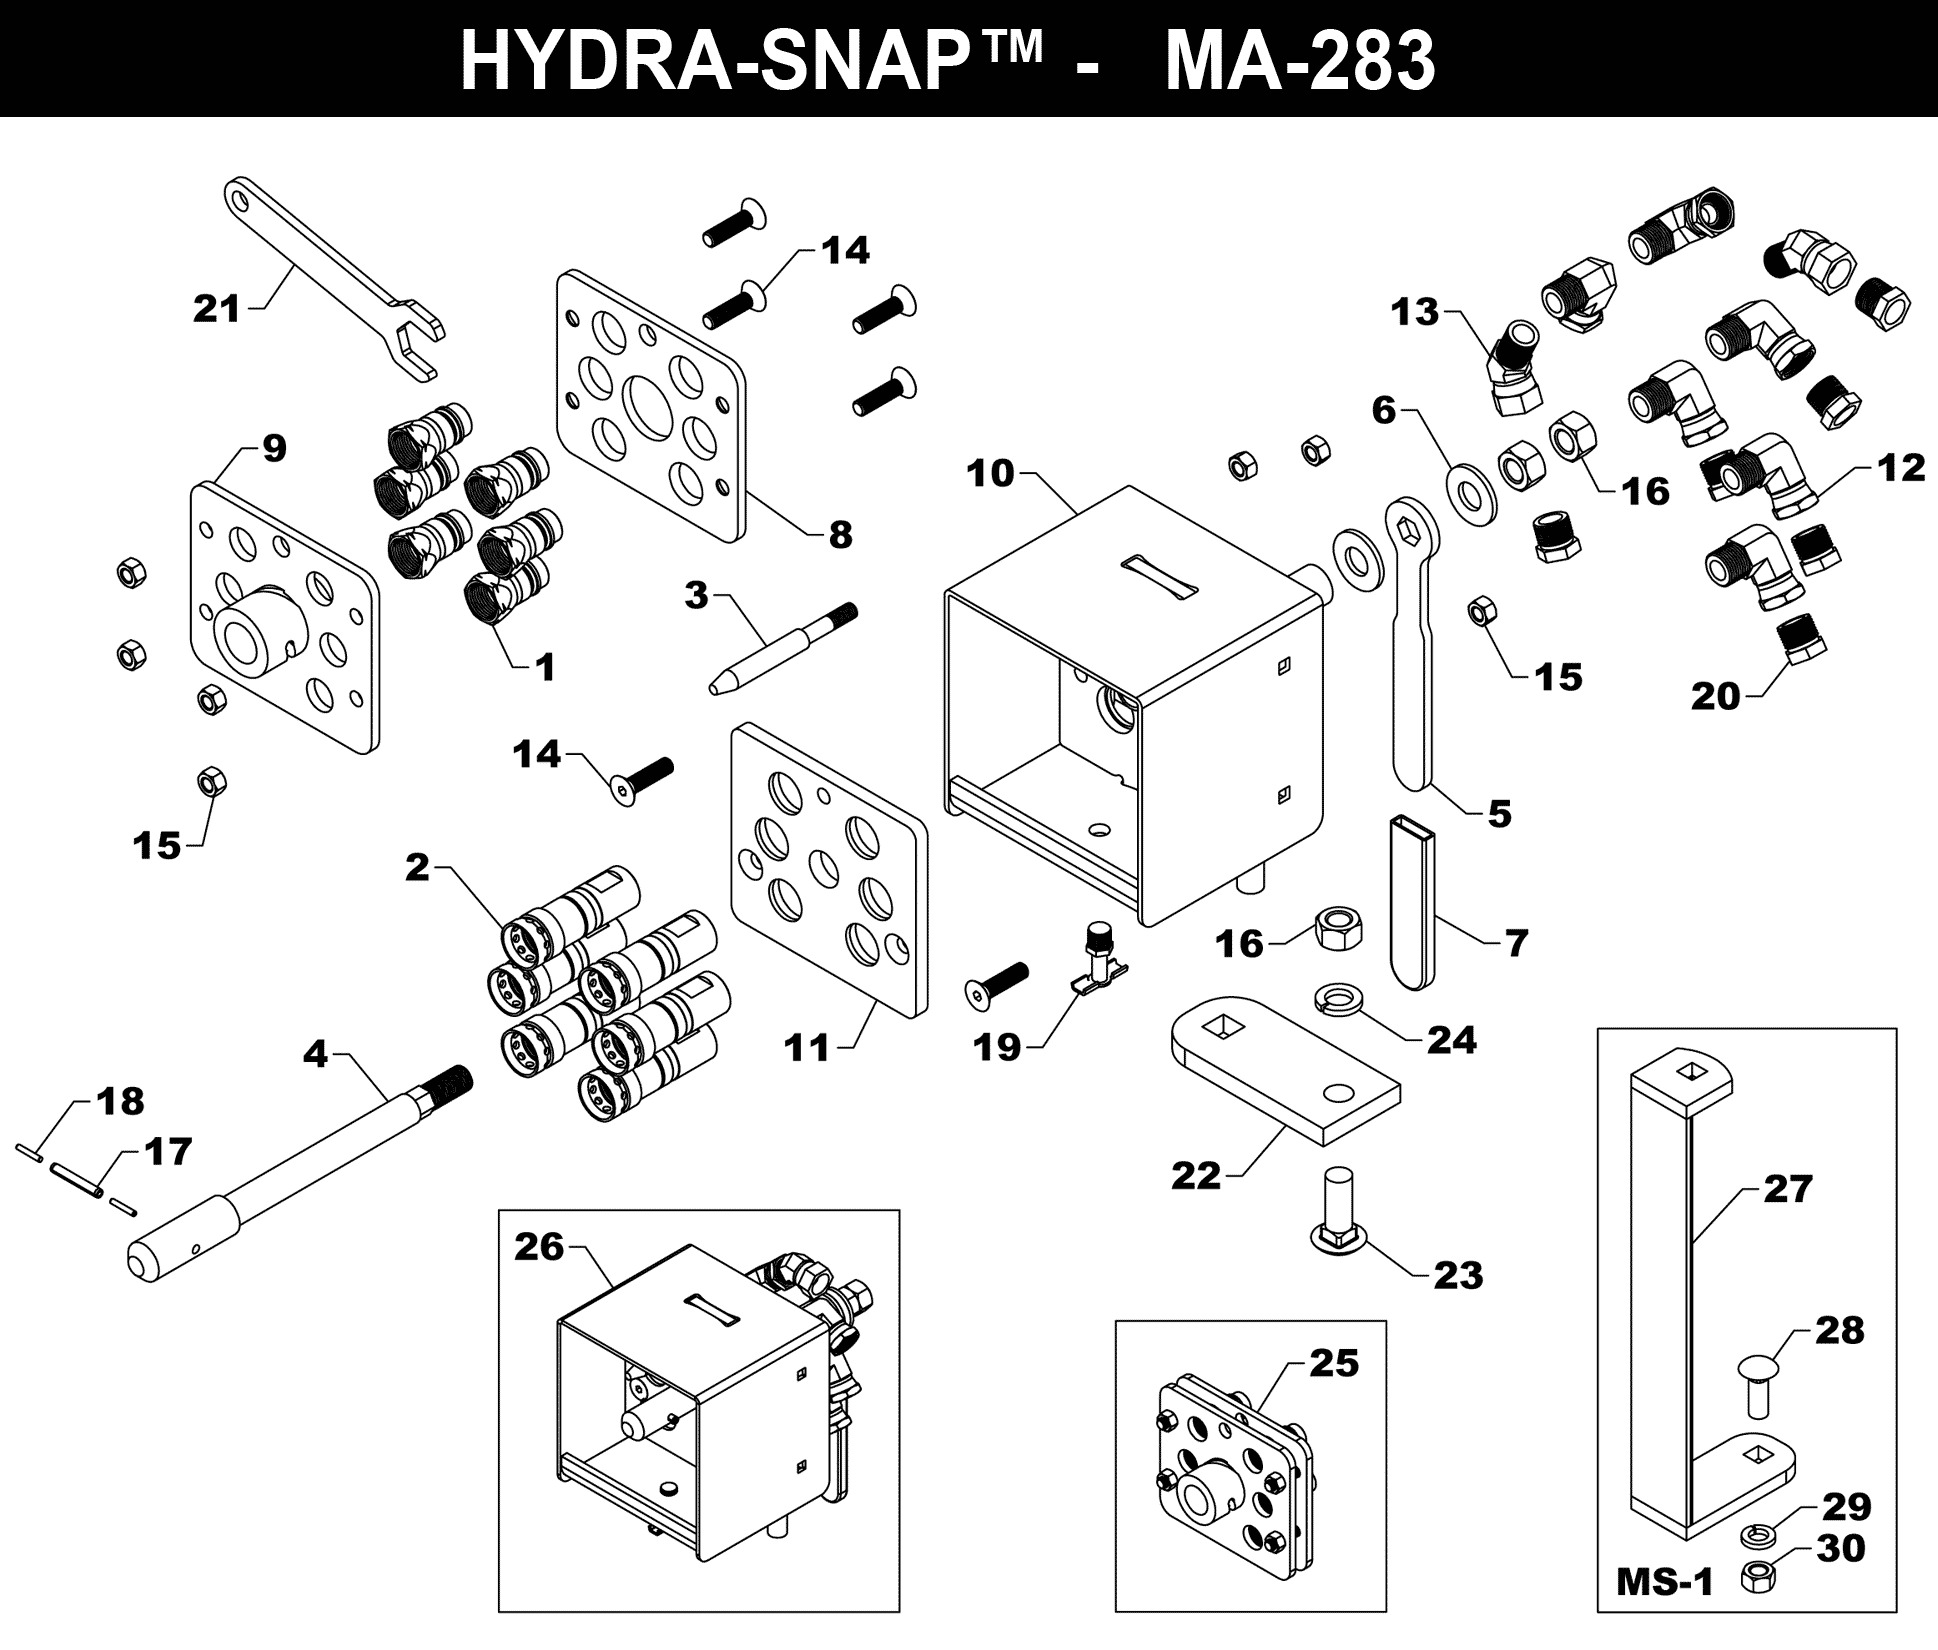 Hydra-Snap™ - MA-283